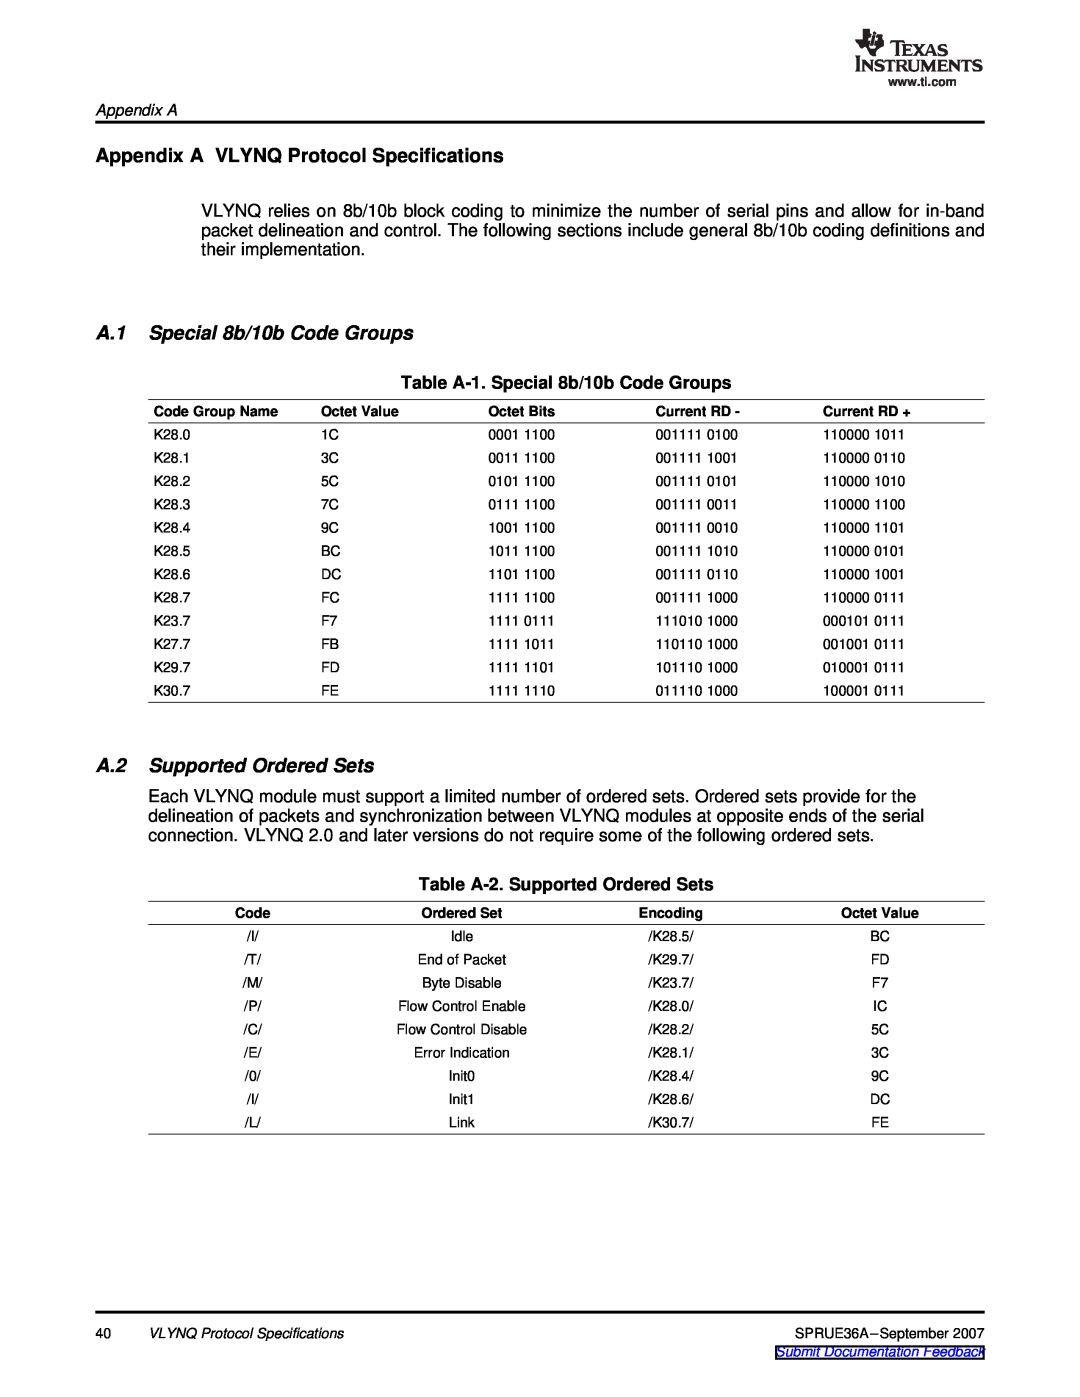 Texas Instruments VLYNQ Port manual Appendix A VLYNQ Protocol Specifications, A.1 Special 8b/10b Code Groups 